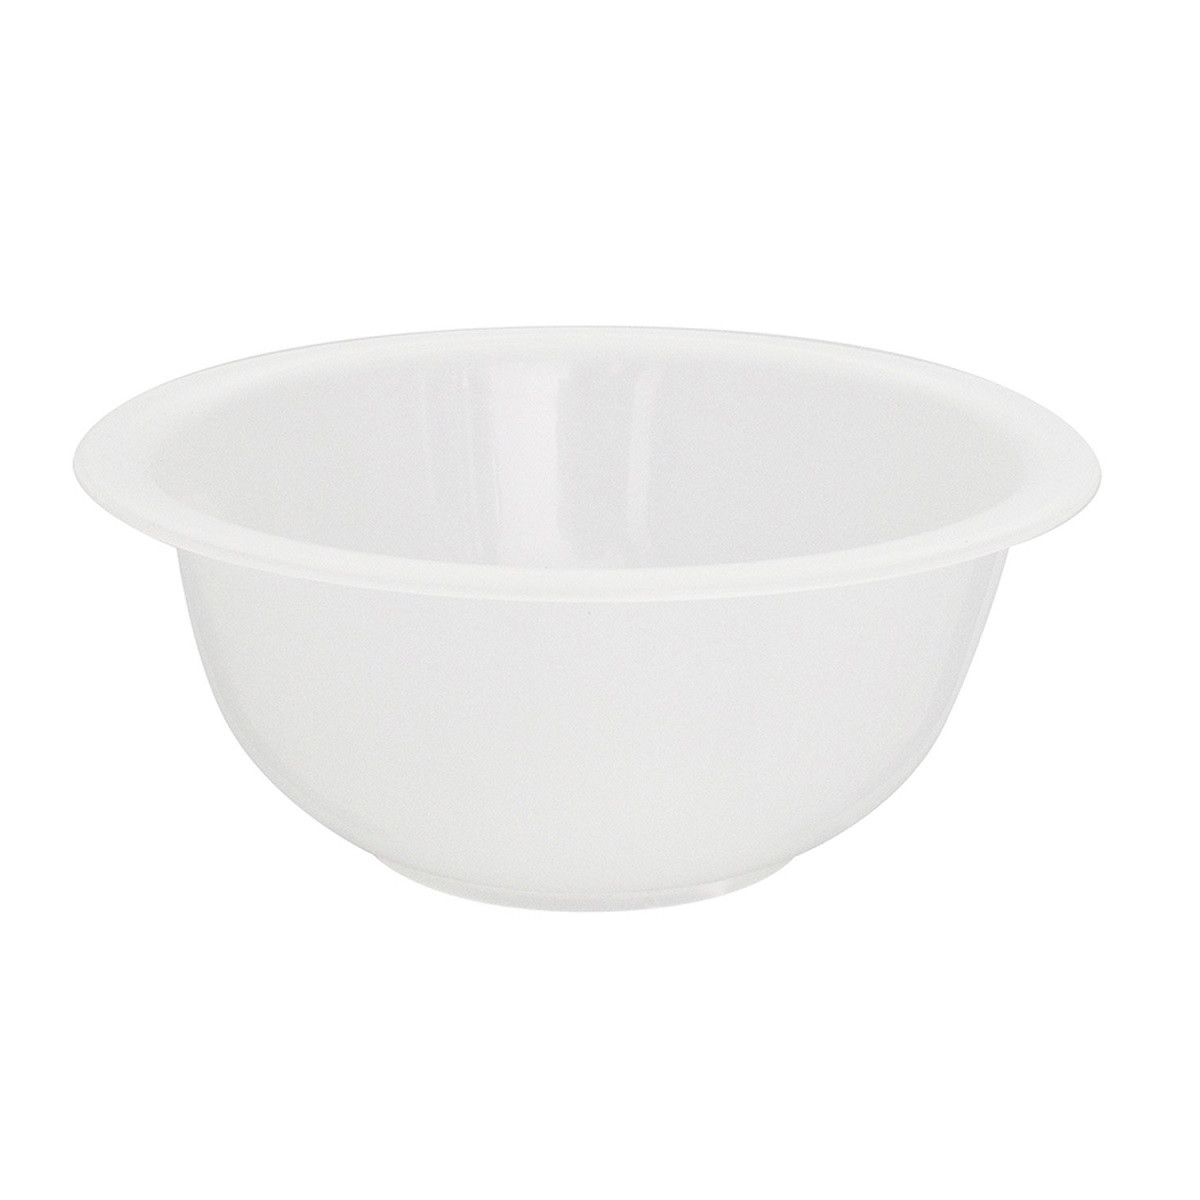 Frying bowl plastic, 32 cm.